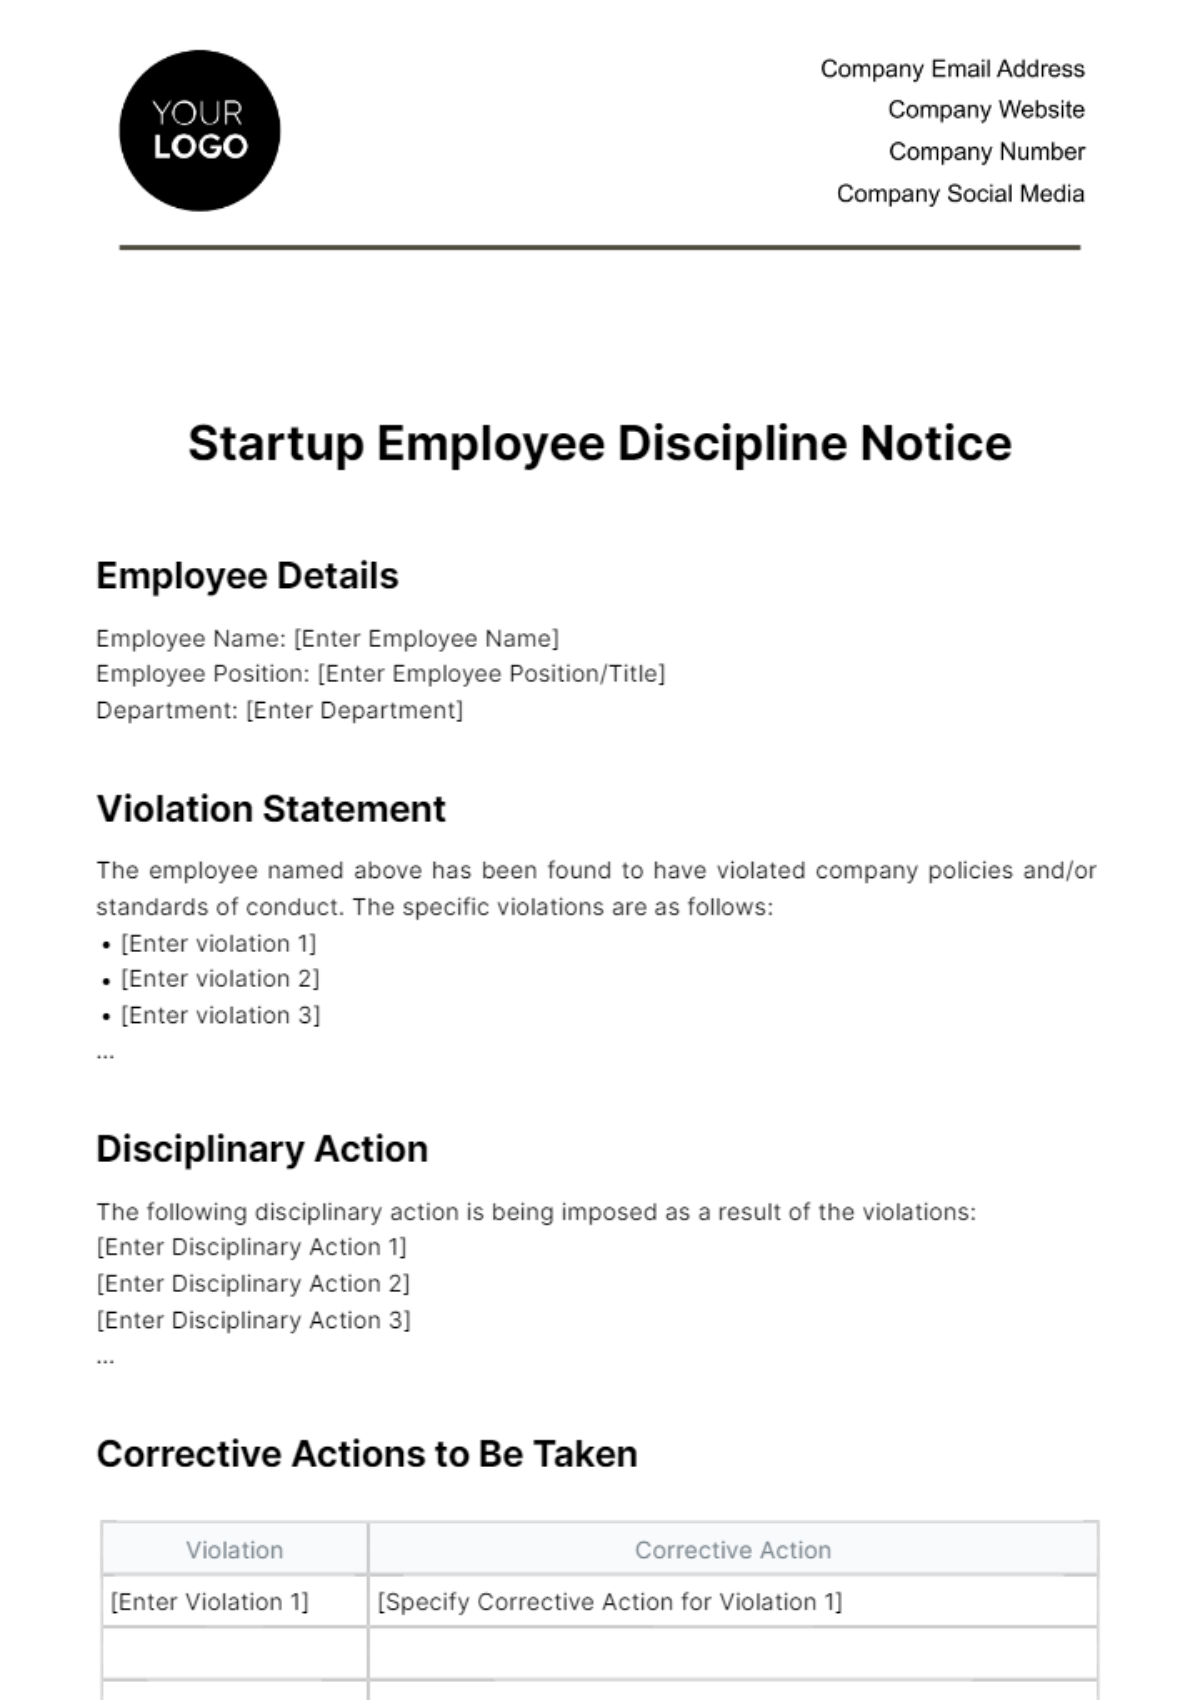 Free Startup Employee Discipline Notice Template